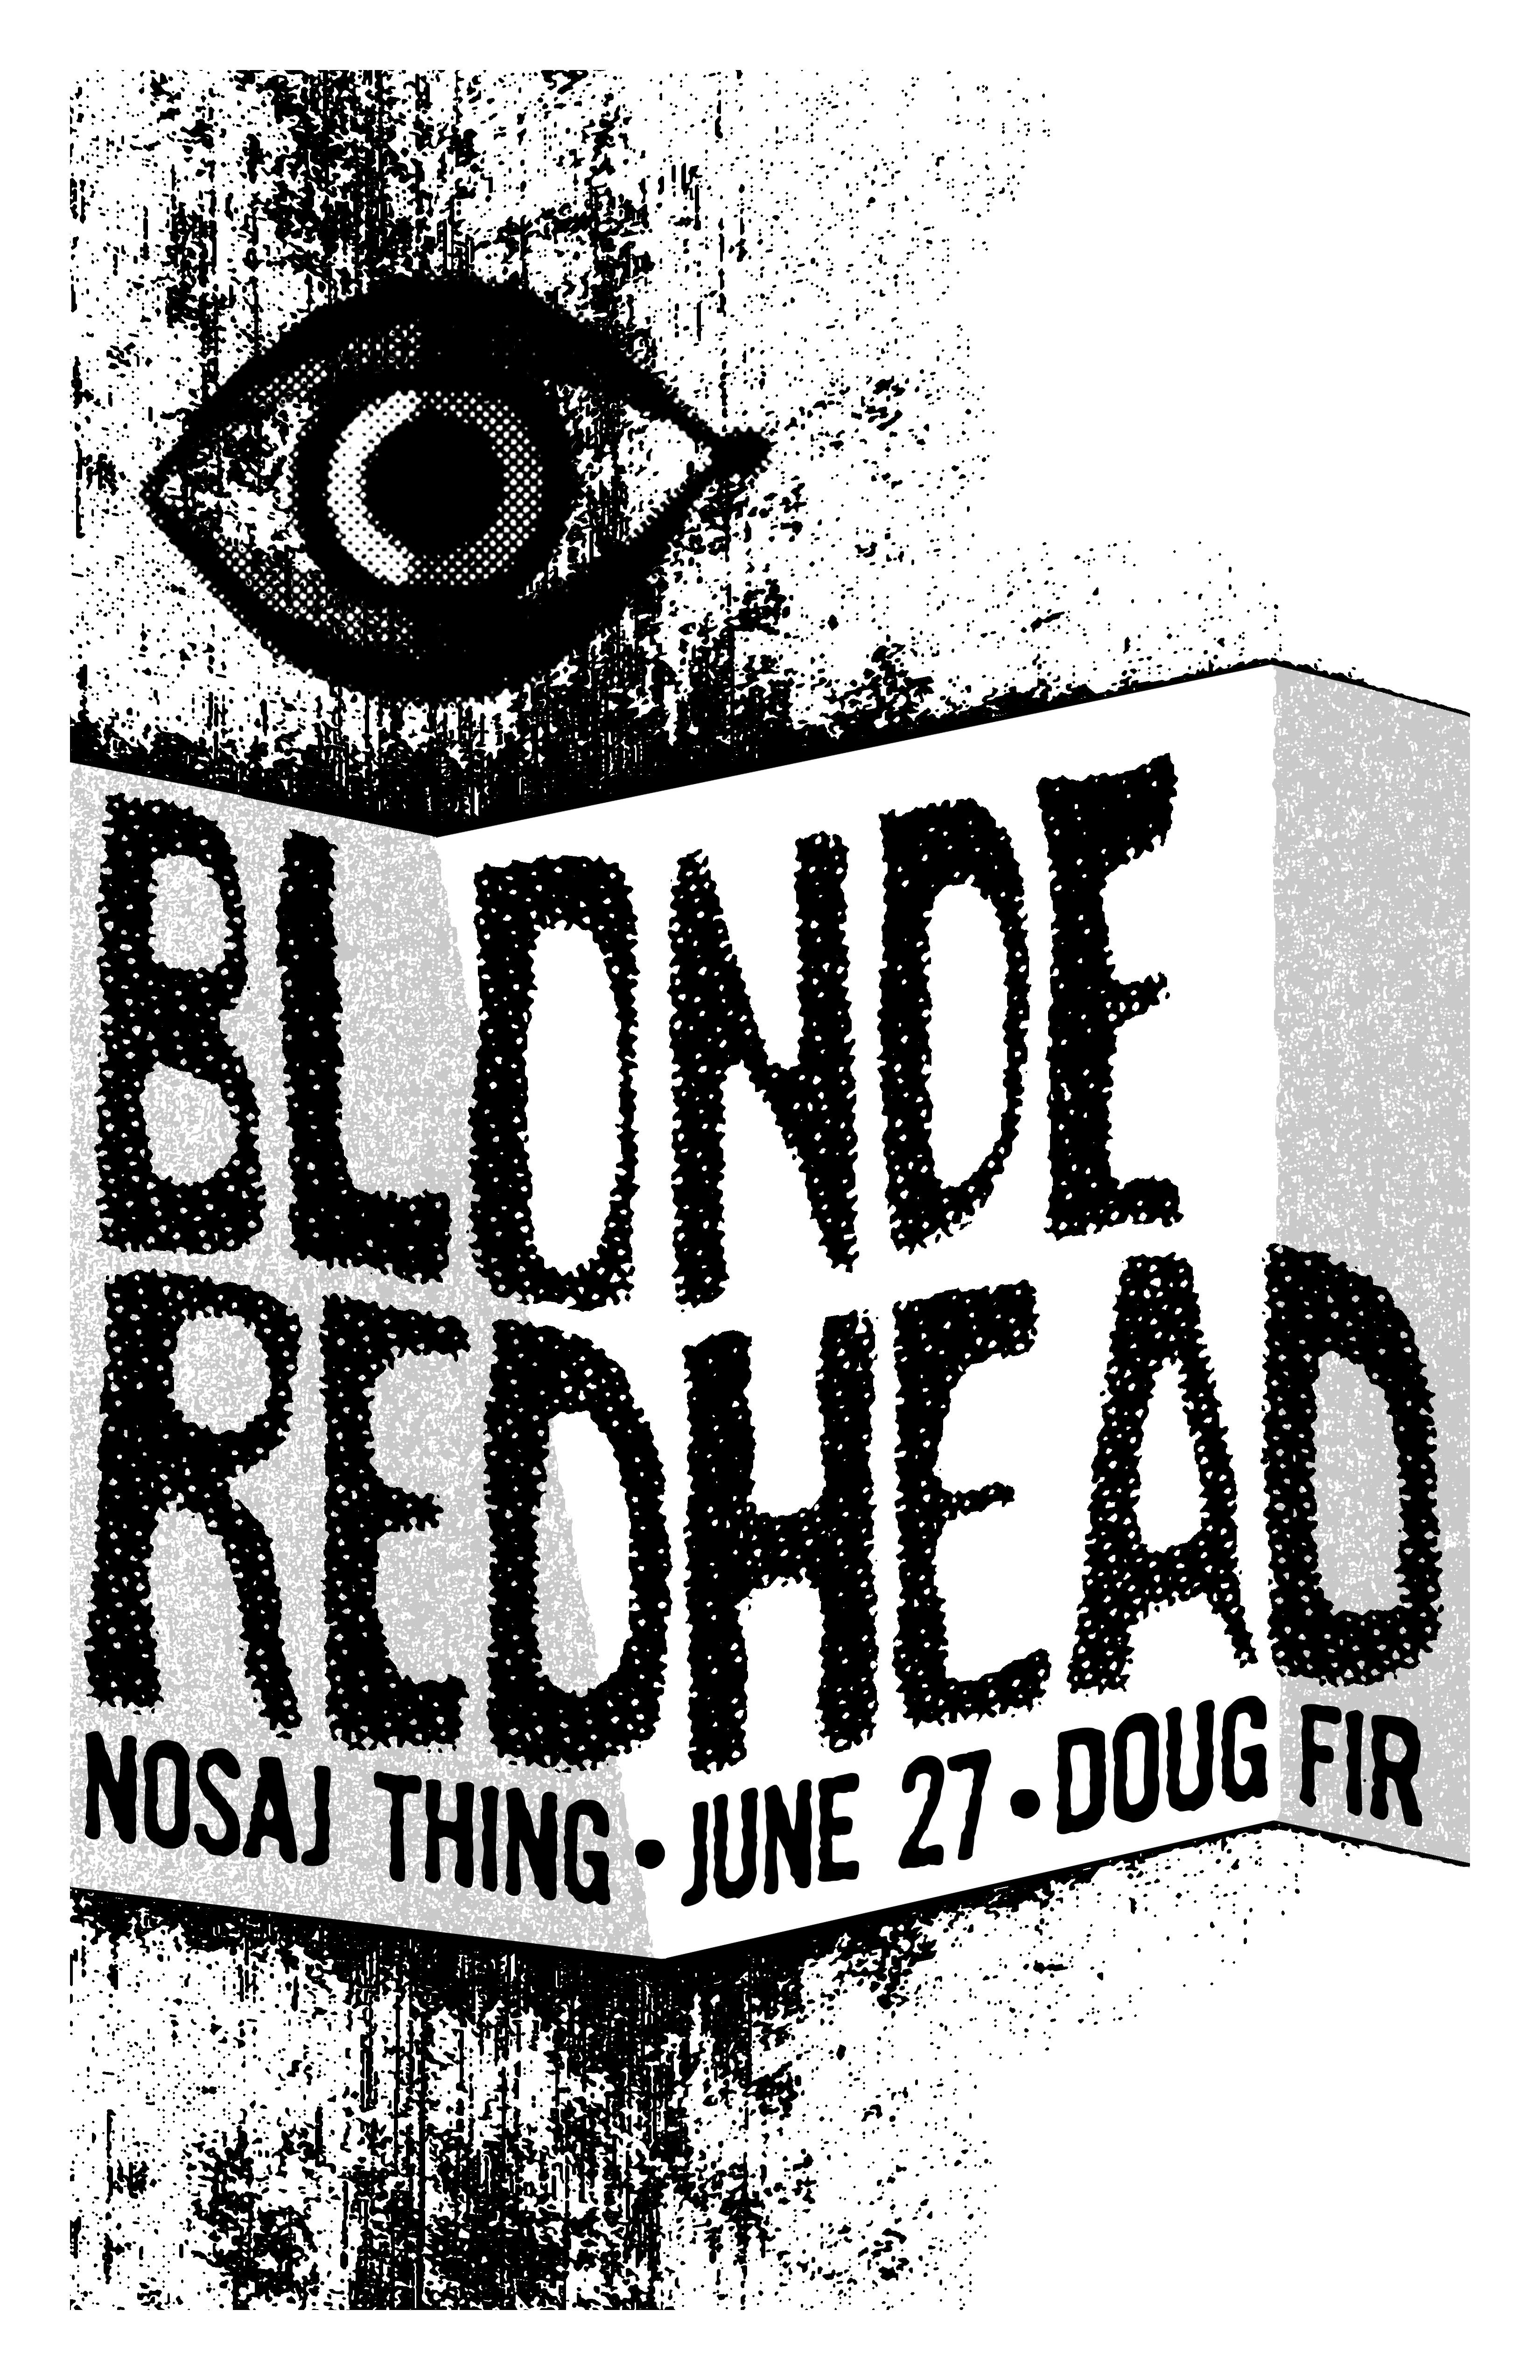 MXP-143.9 Blonde Redhead 2011 Doug Fir  Jun 27 Concert Poster